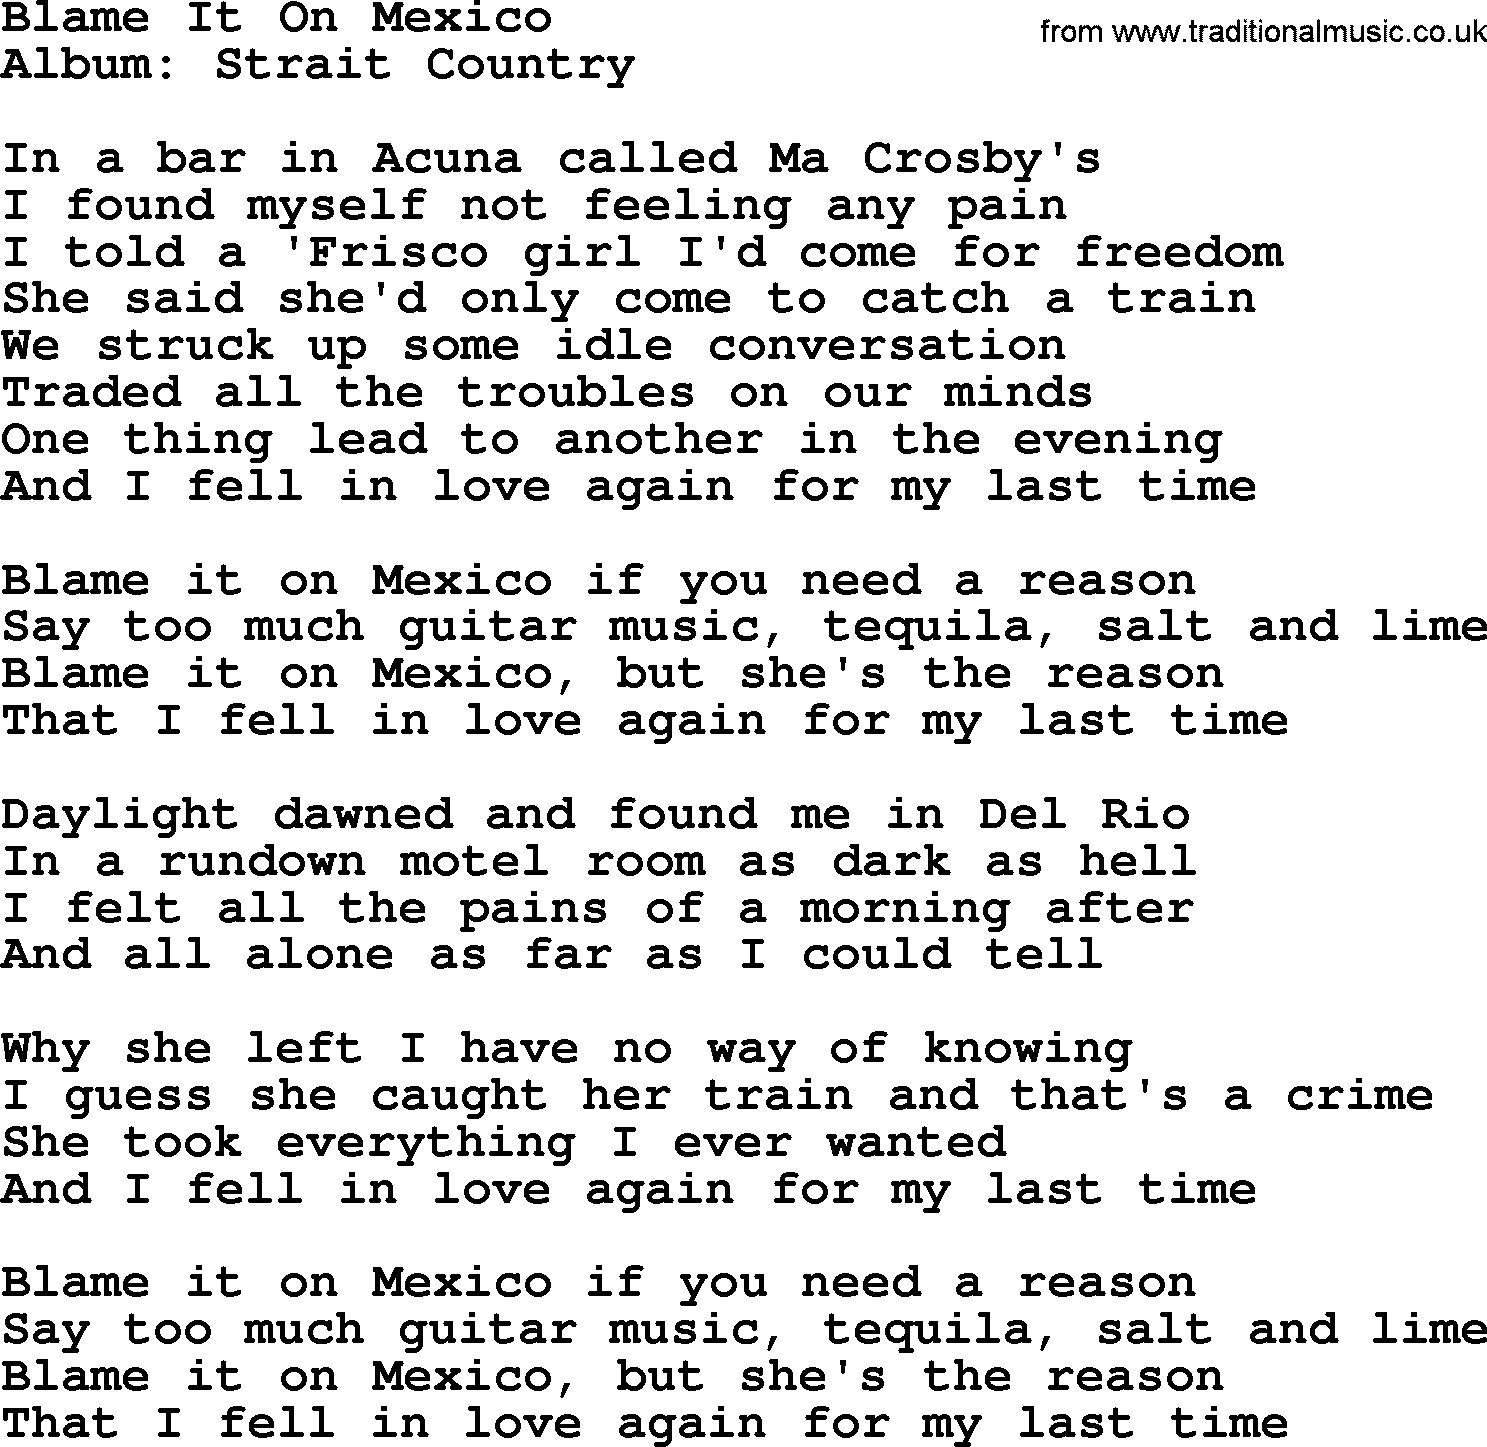 George Strait song: Blame It On Mexico, lyrics